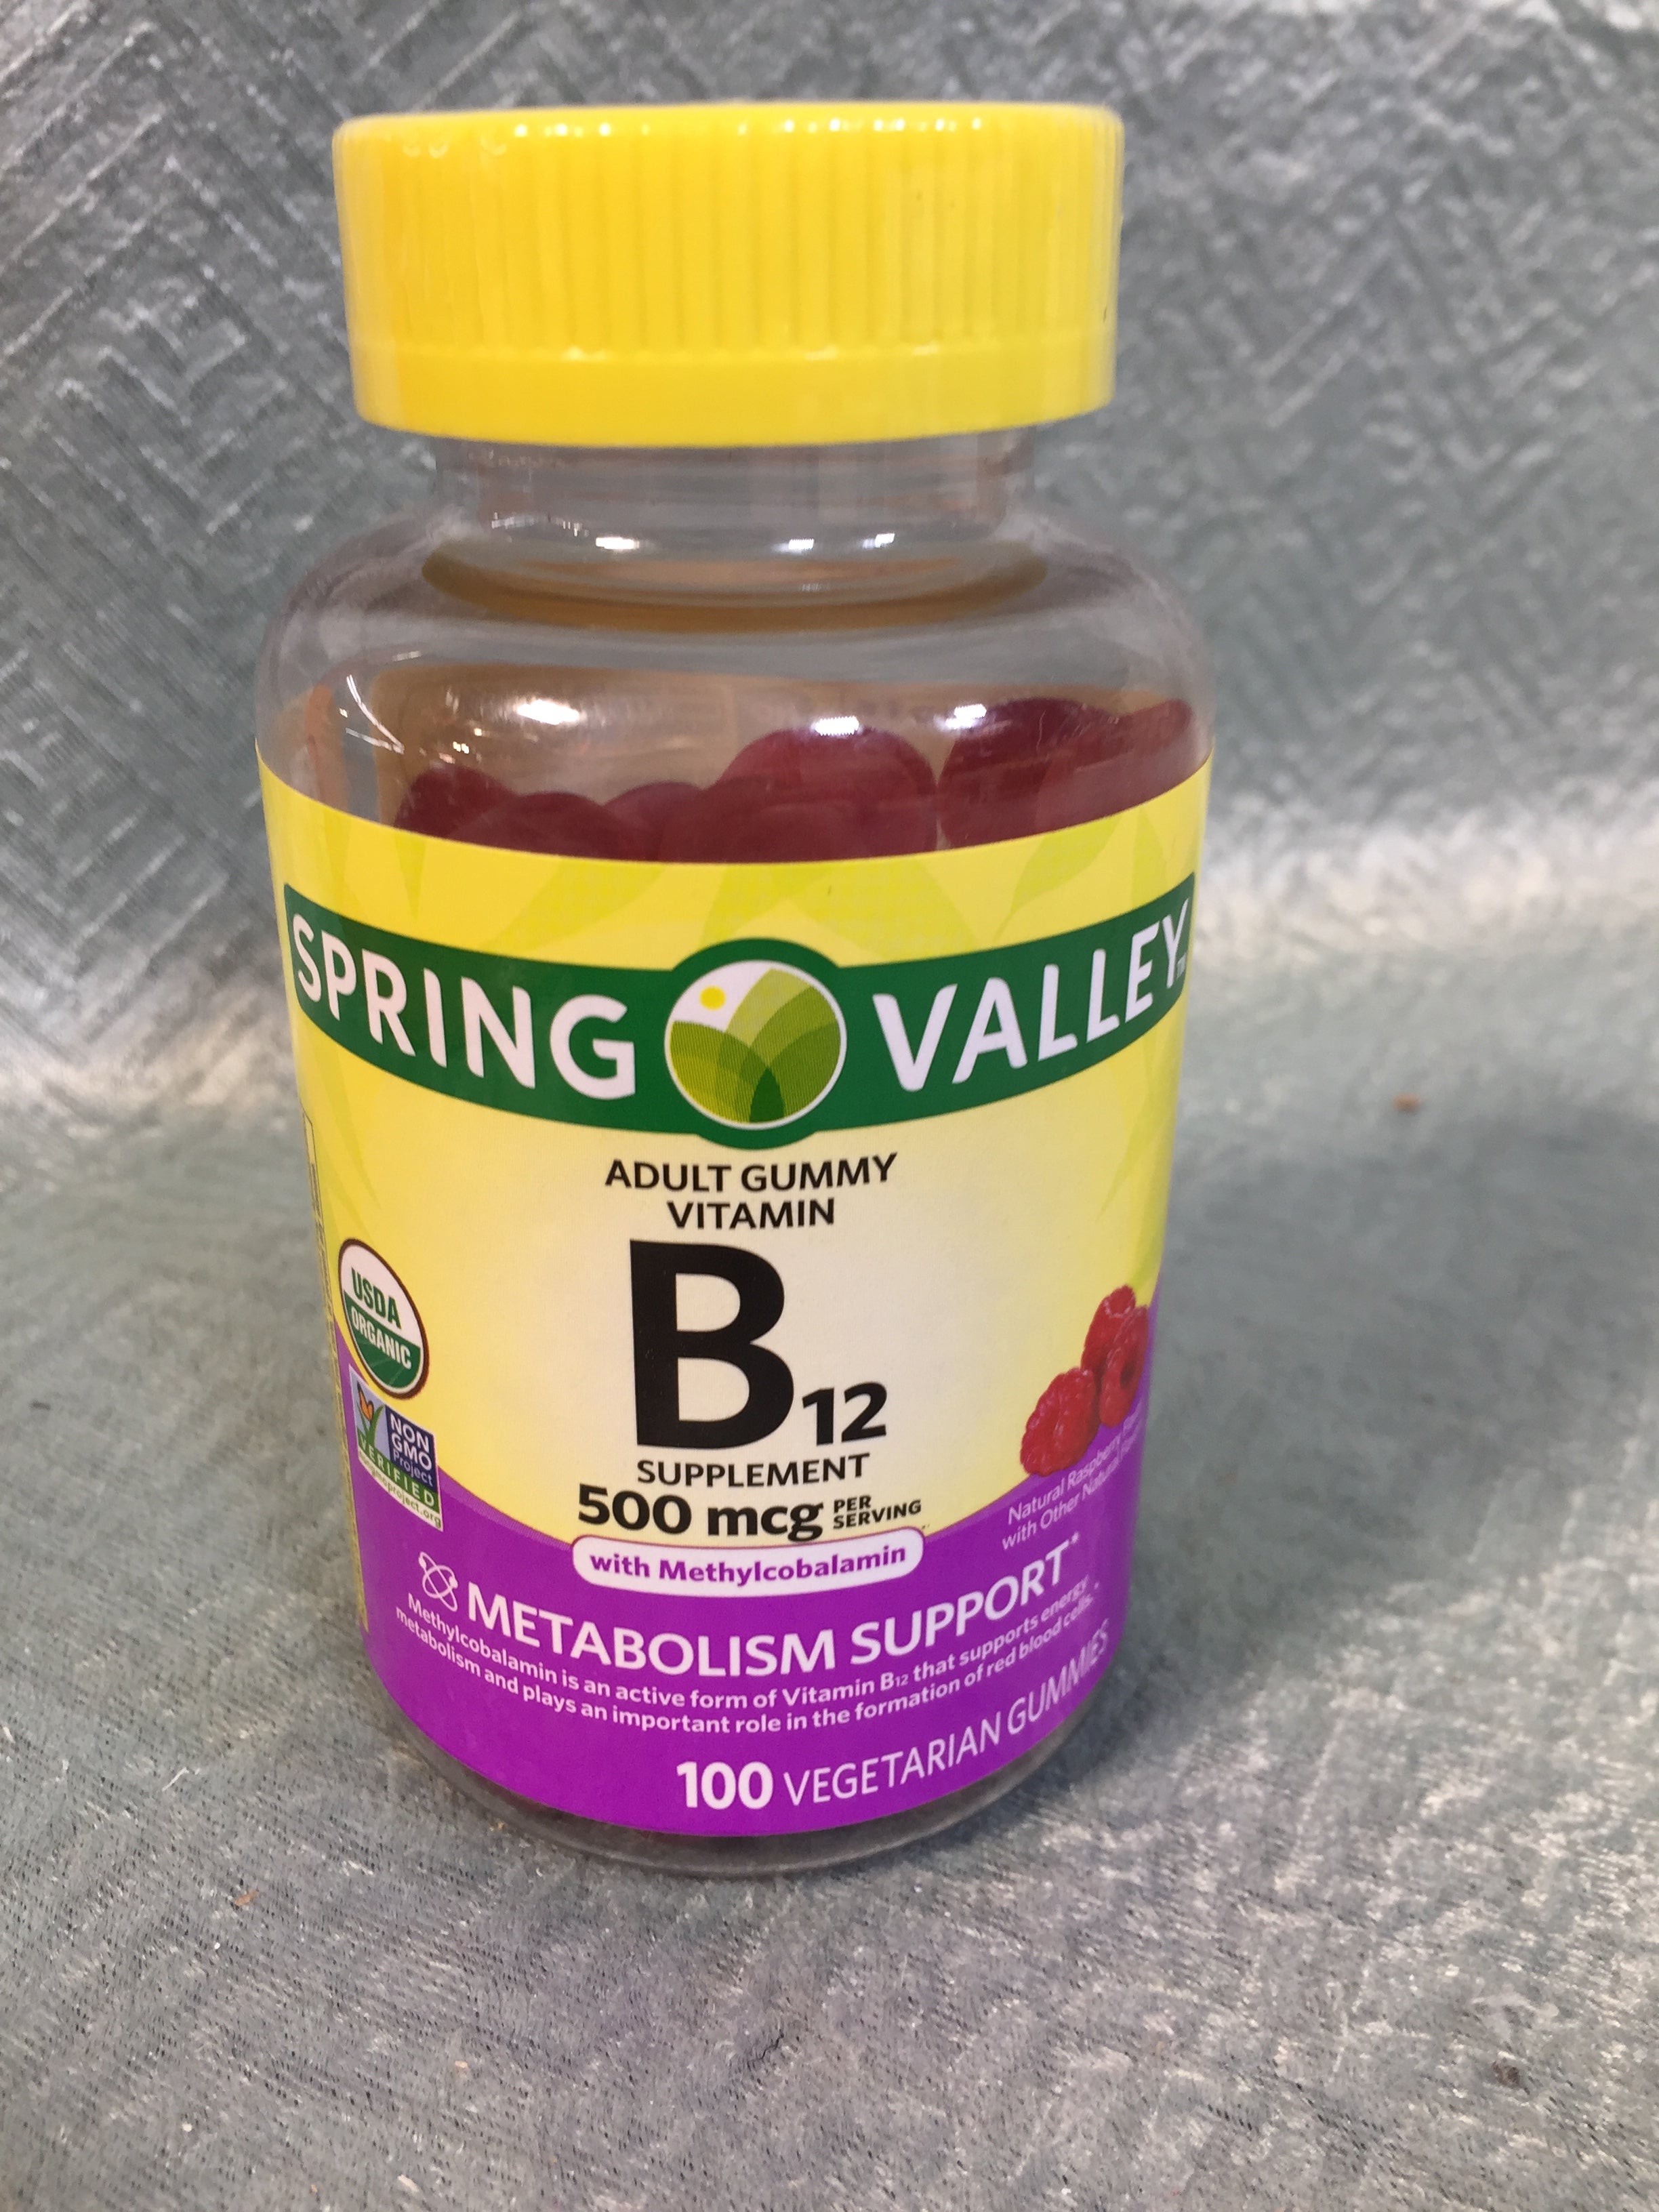 Spring Valley Adult Gummy Vitamin B12, 500mcg with Methylcobalamin, 100 Vegetarian Gummies, Natural Raspberry Flavor (7592982446318)